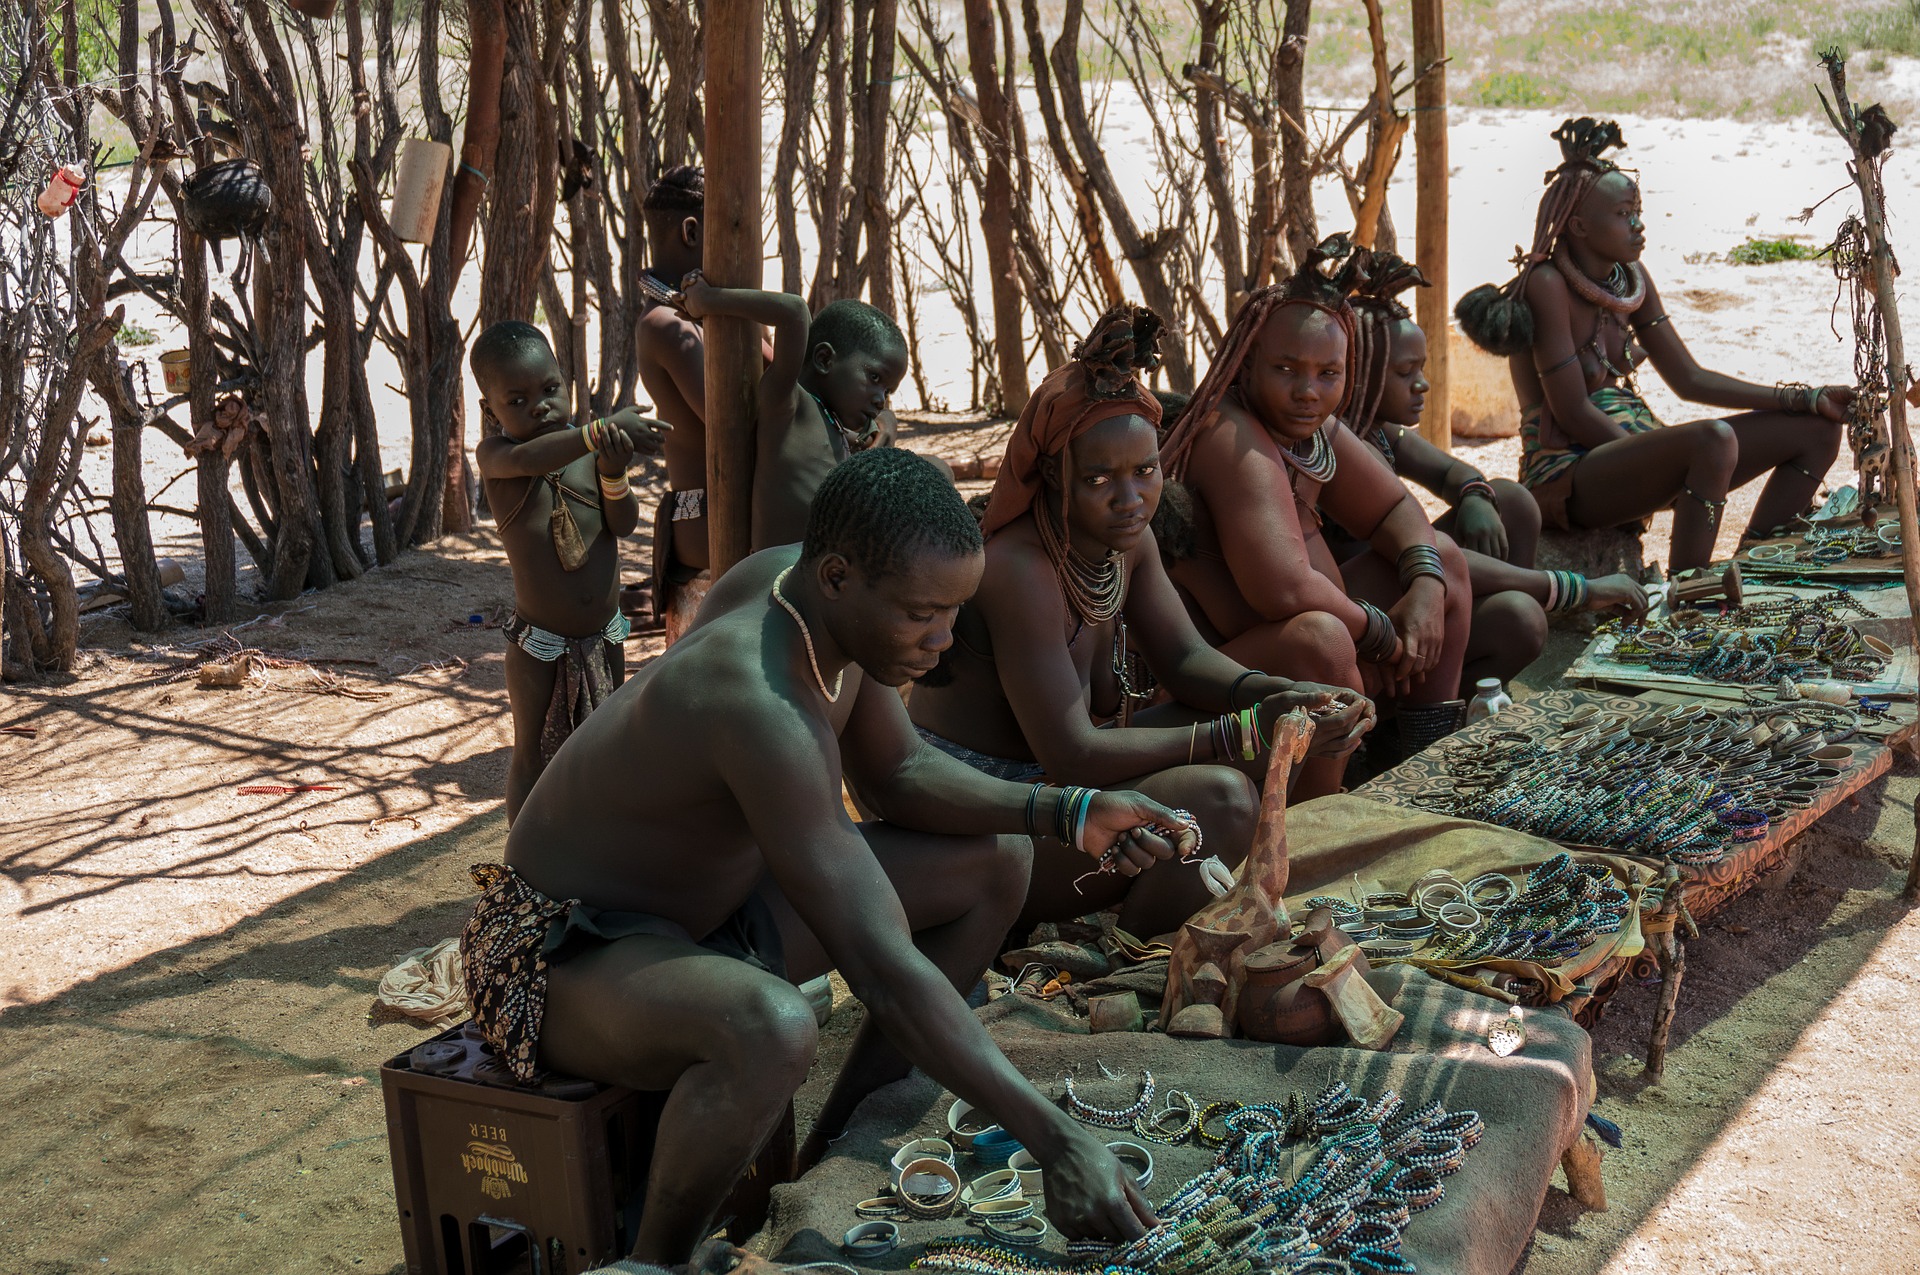 Himba tribe members displaying their wares.